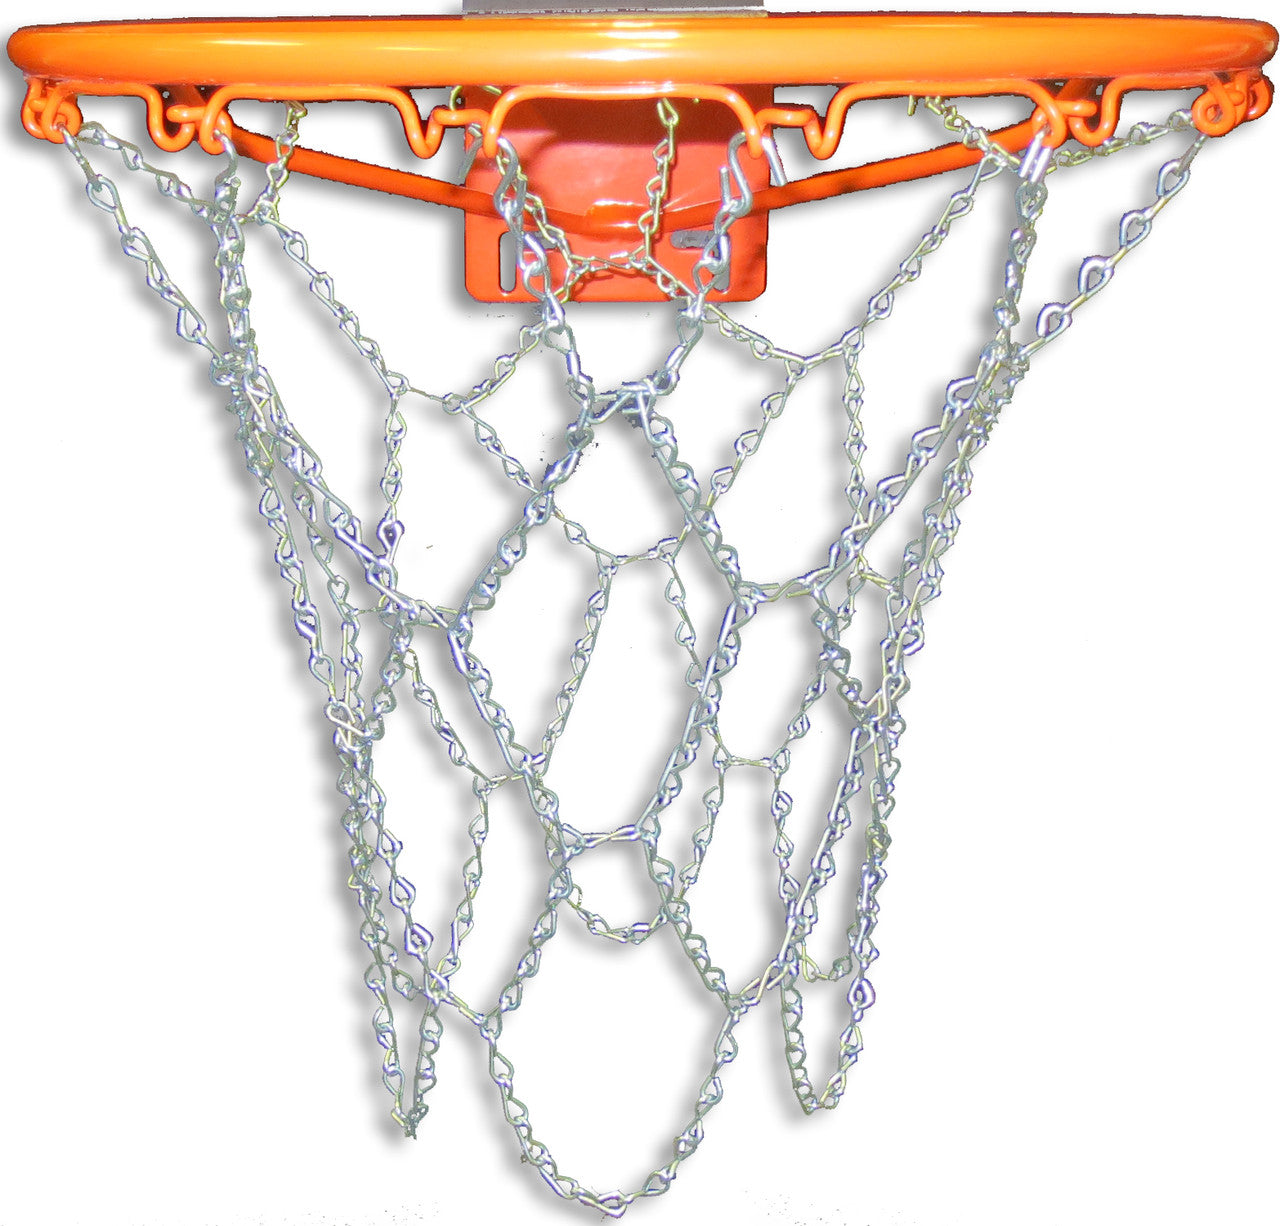 Steel Chain Basketball Net for Traditional Rim
